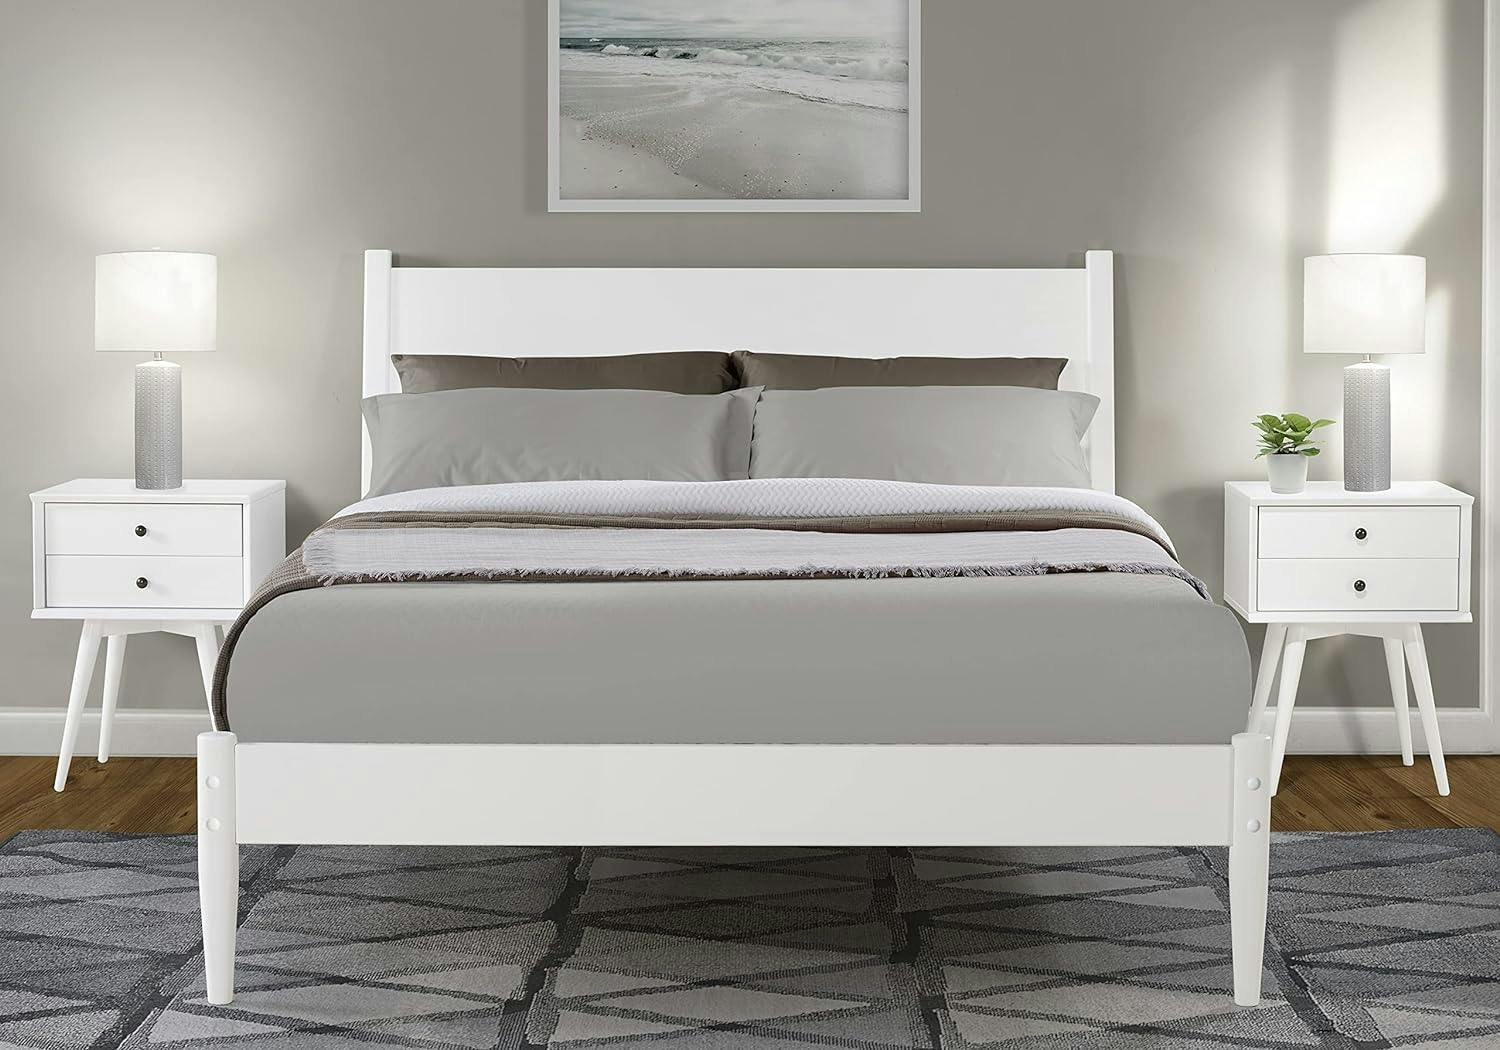 Elegant Pine Wood Queen Bed with Sleek Mid-Century Design in White